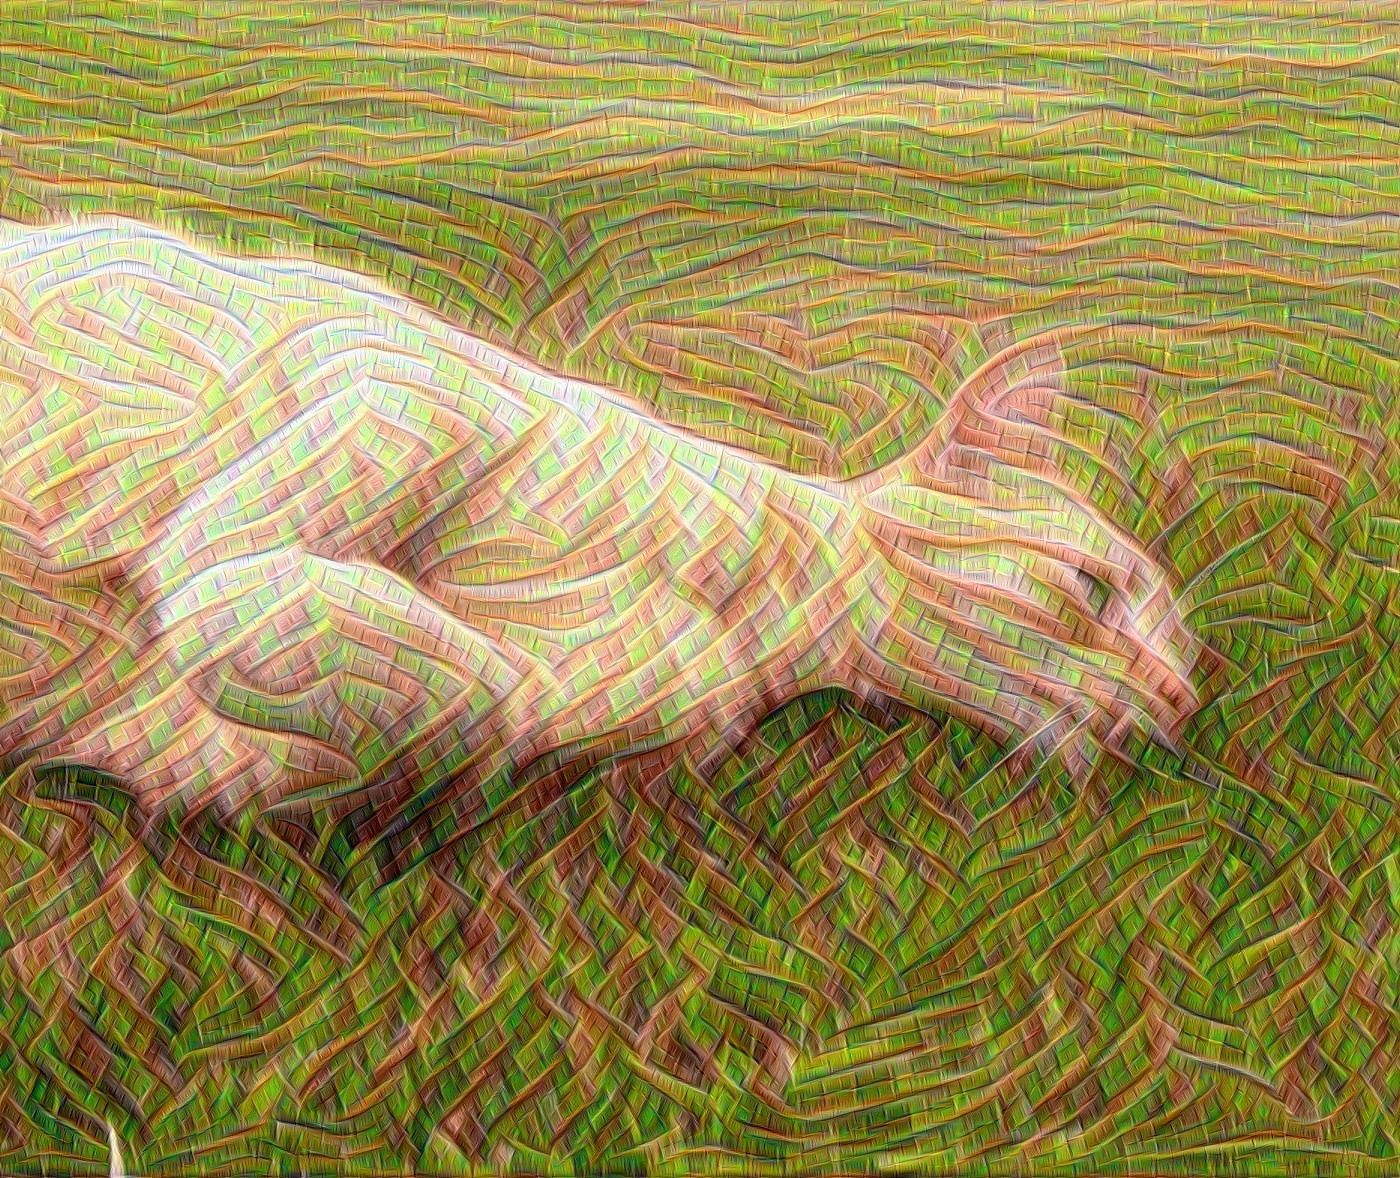 Cat mosaic